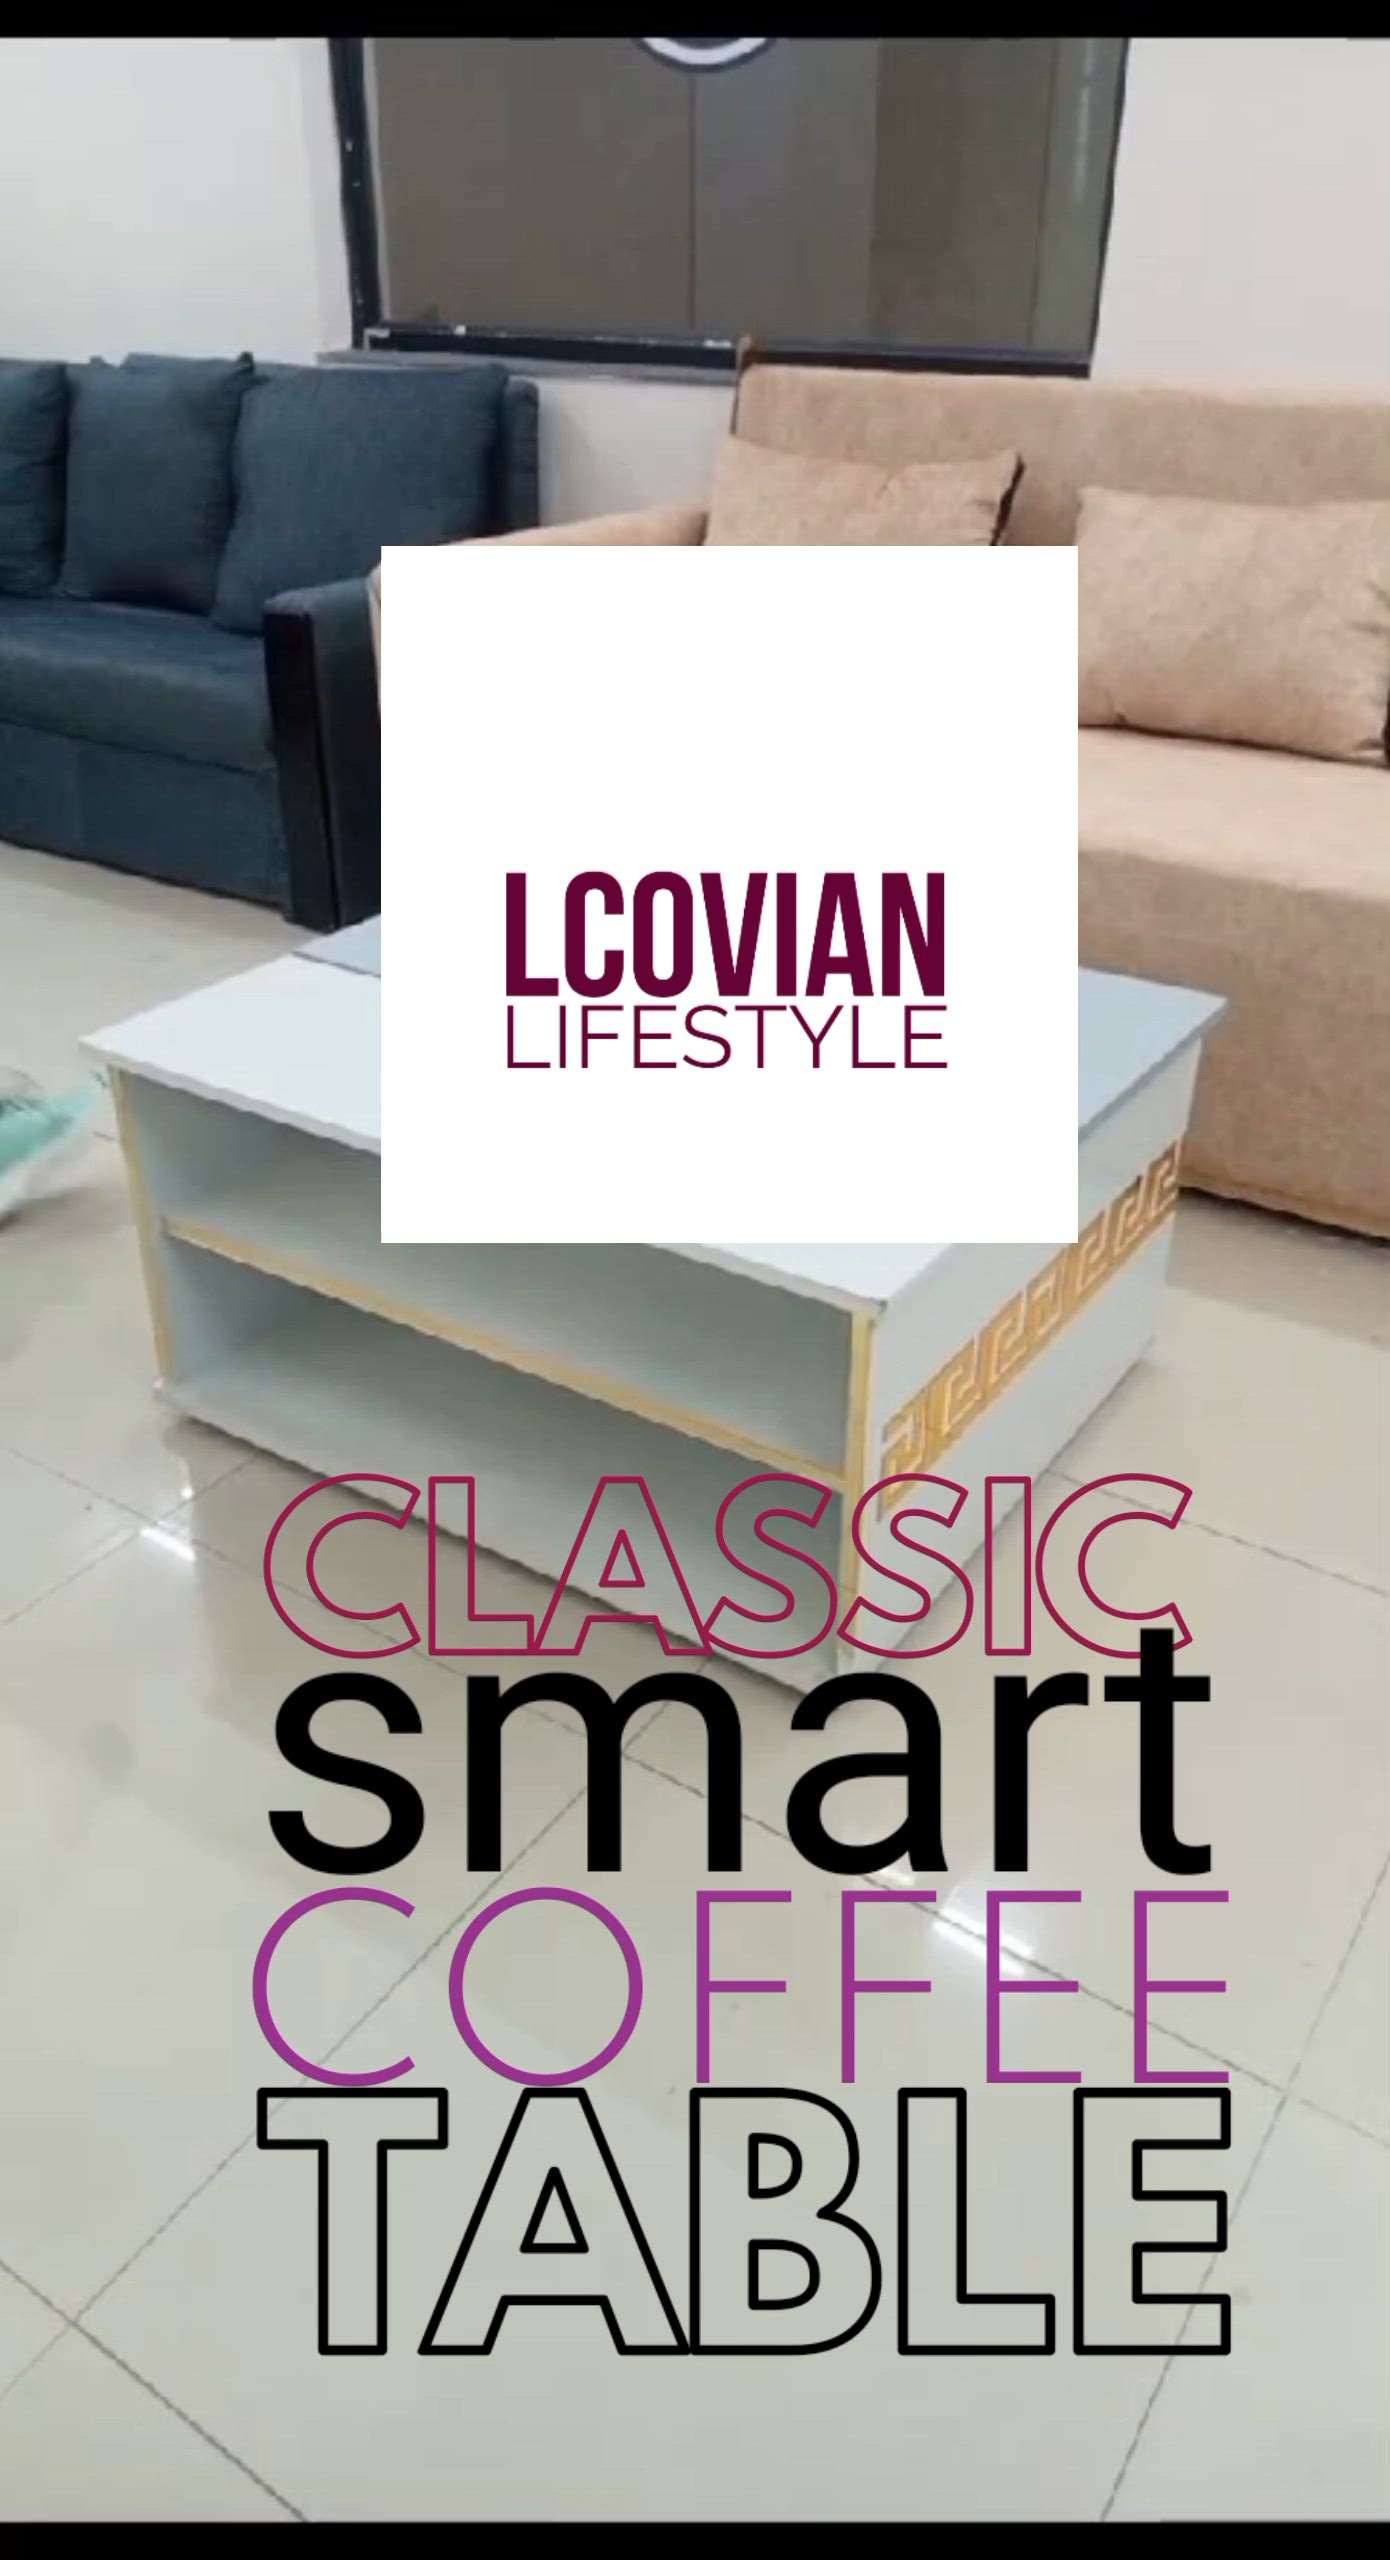 LCOVE Smart Classic Centre Table
8871064060

#Centretable #centretables